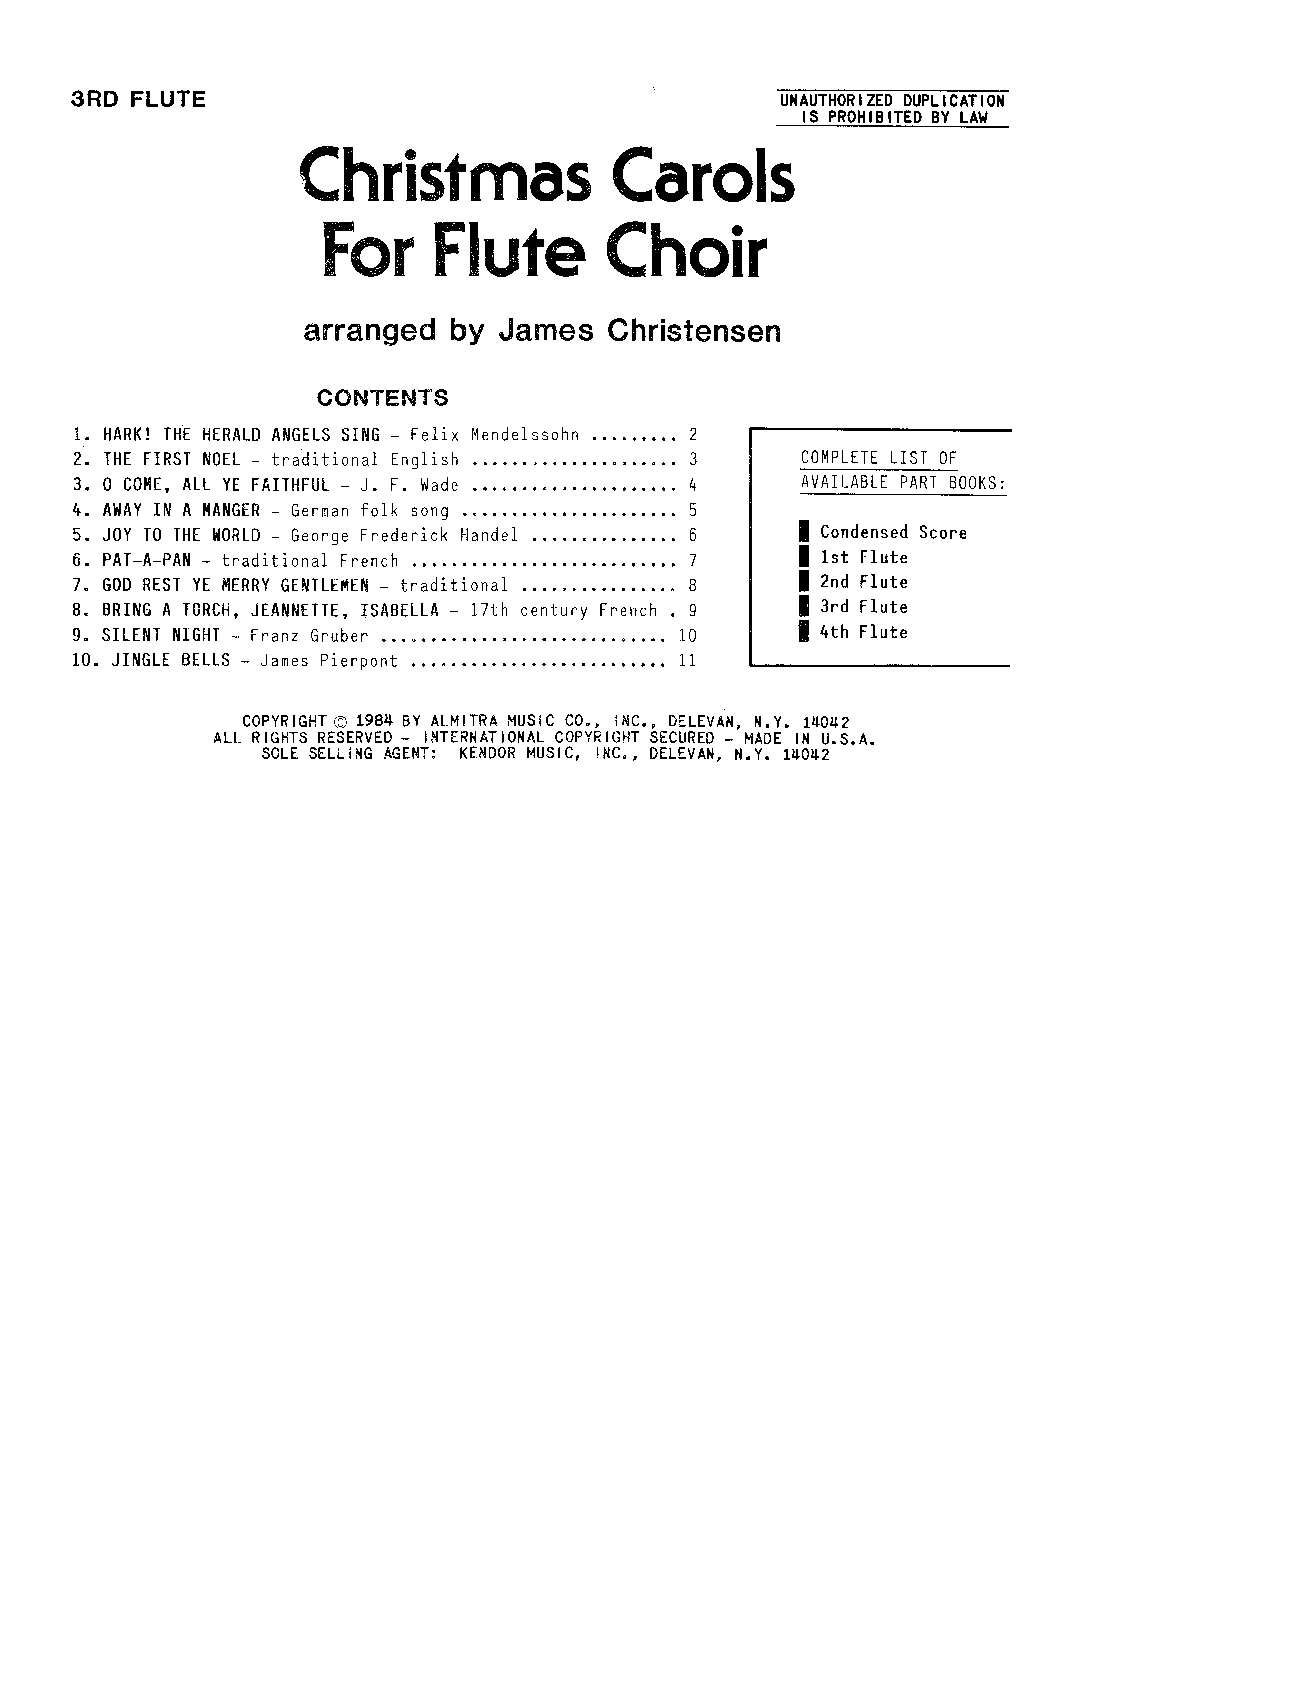 Christmas Carols For Flute Choir - 3rd Flute sheet music